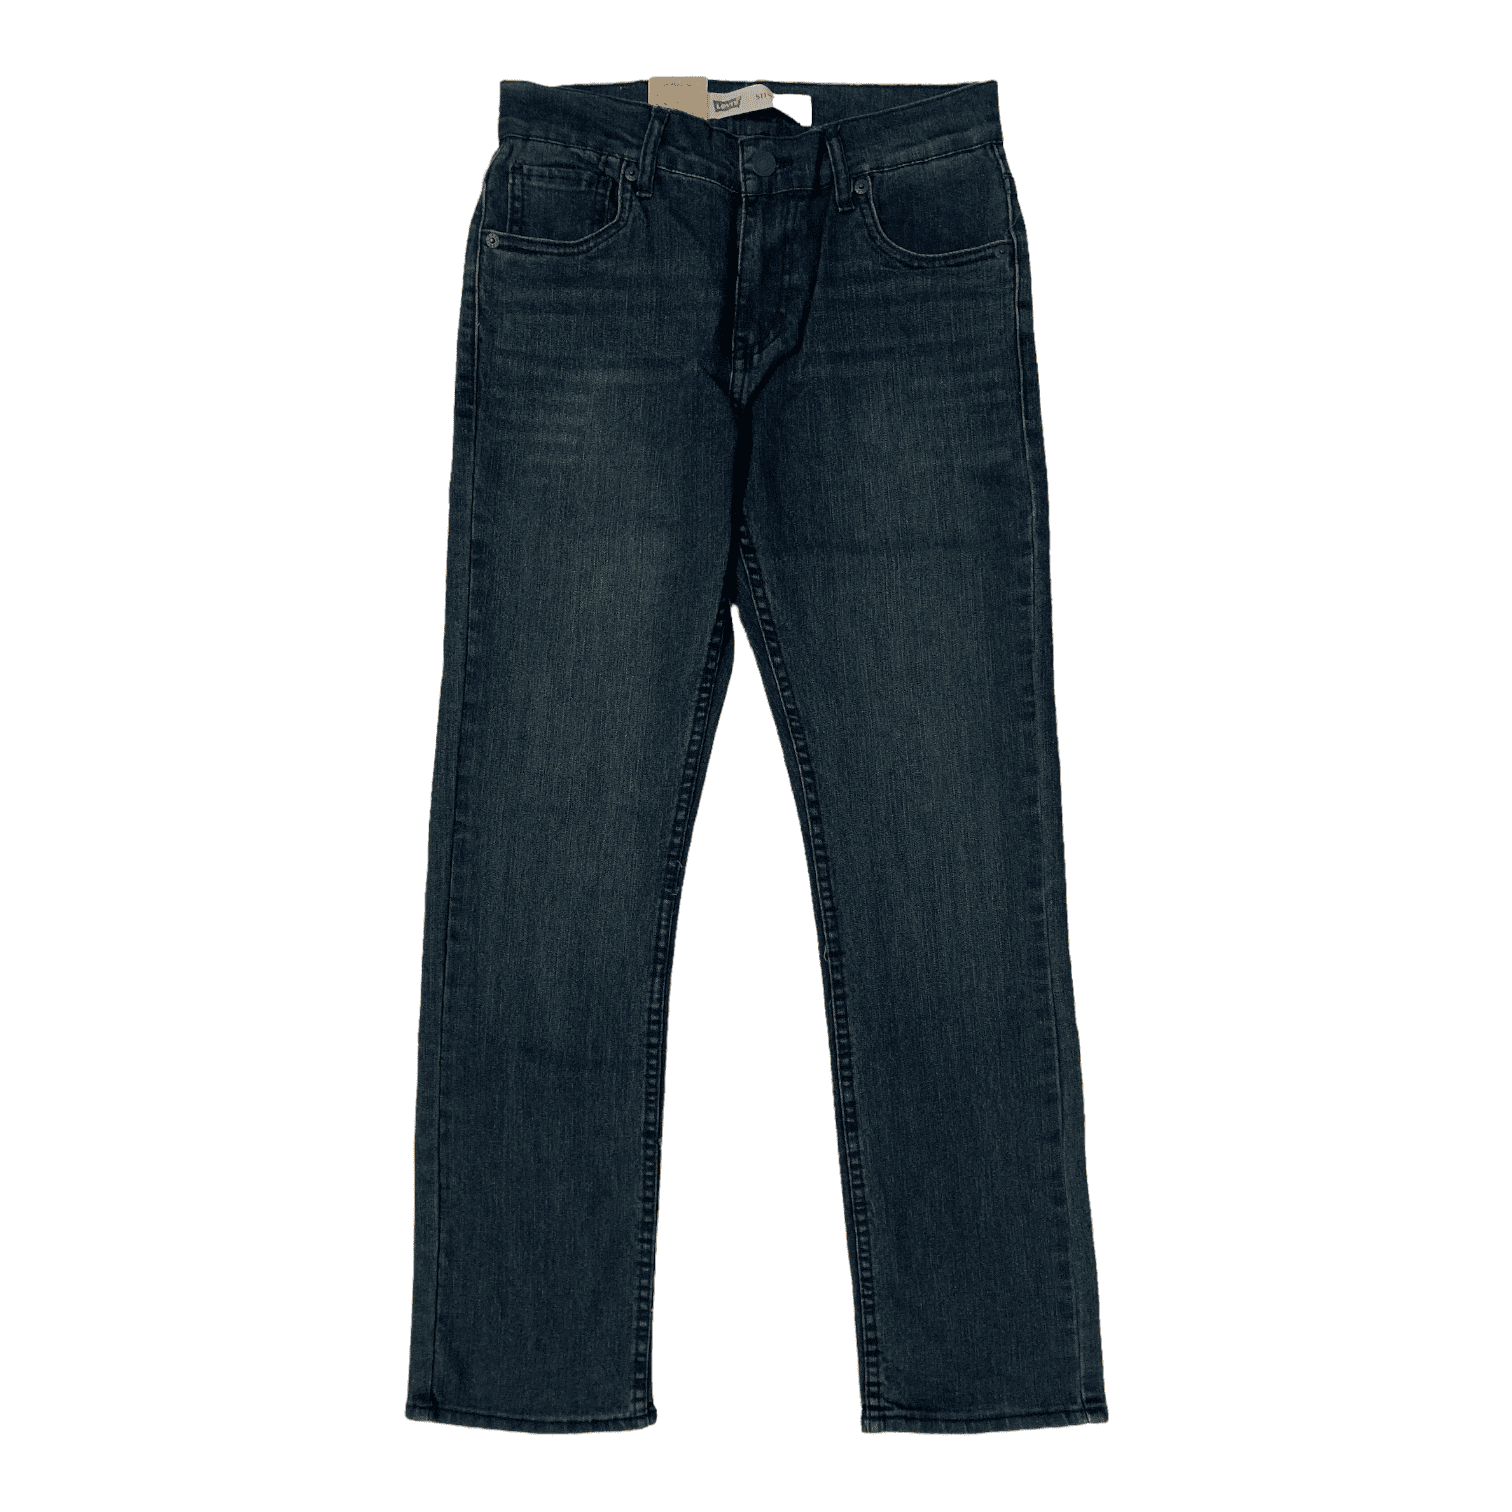 Levi Strauss Boy's 511 Slim Fit Stretch Denim Jean (Dark Stonewash, 16 Reg ( 28x28)) 